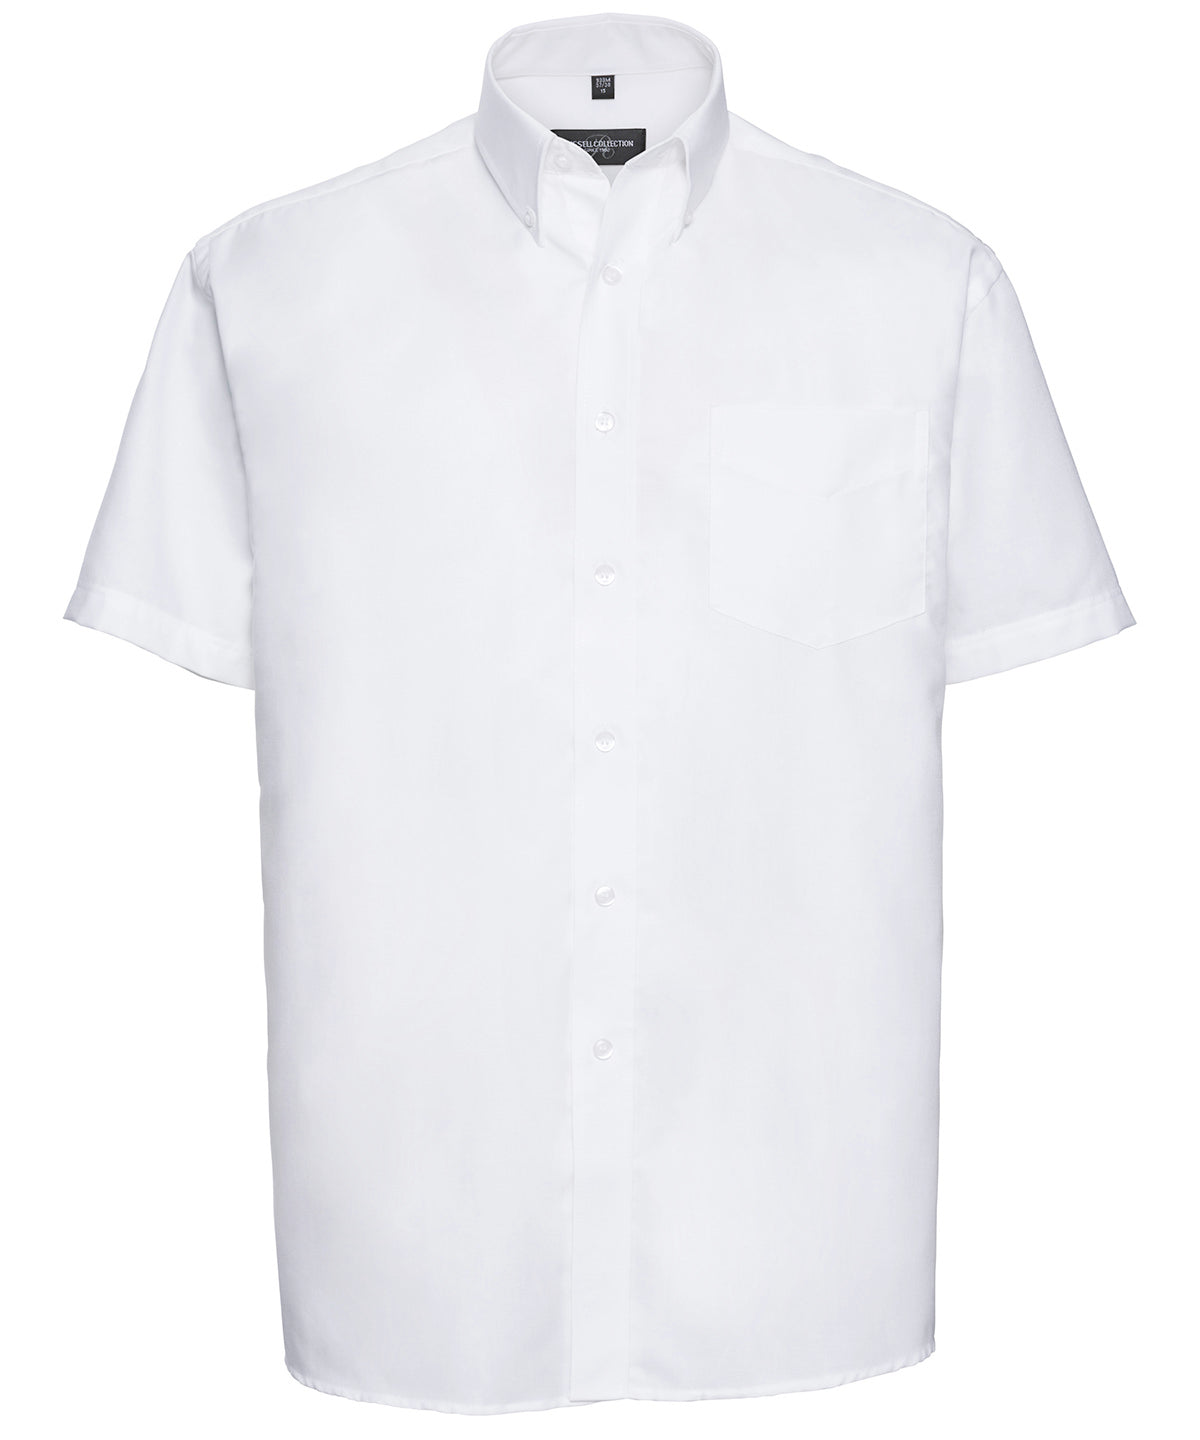 Bolir - Short Sleeve Easycare Oxford Shirt